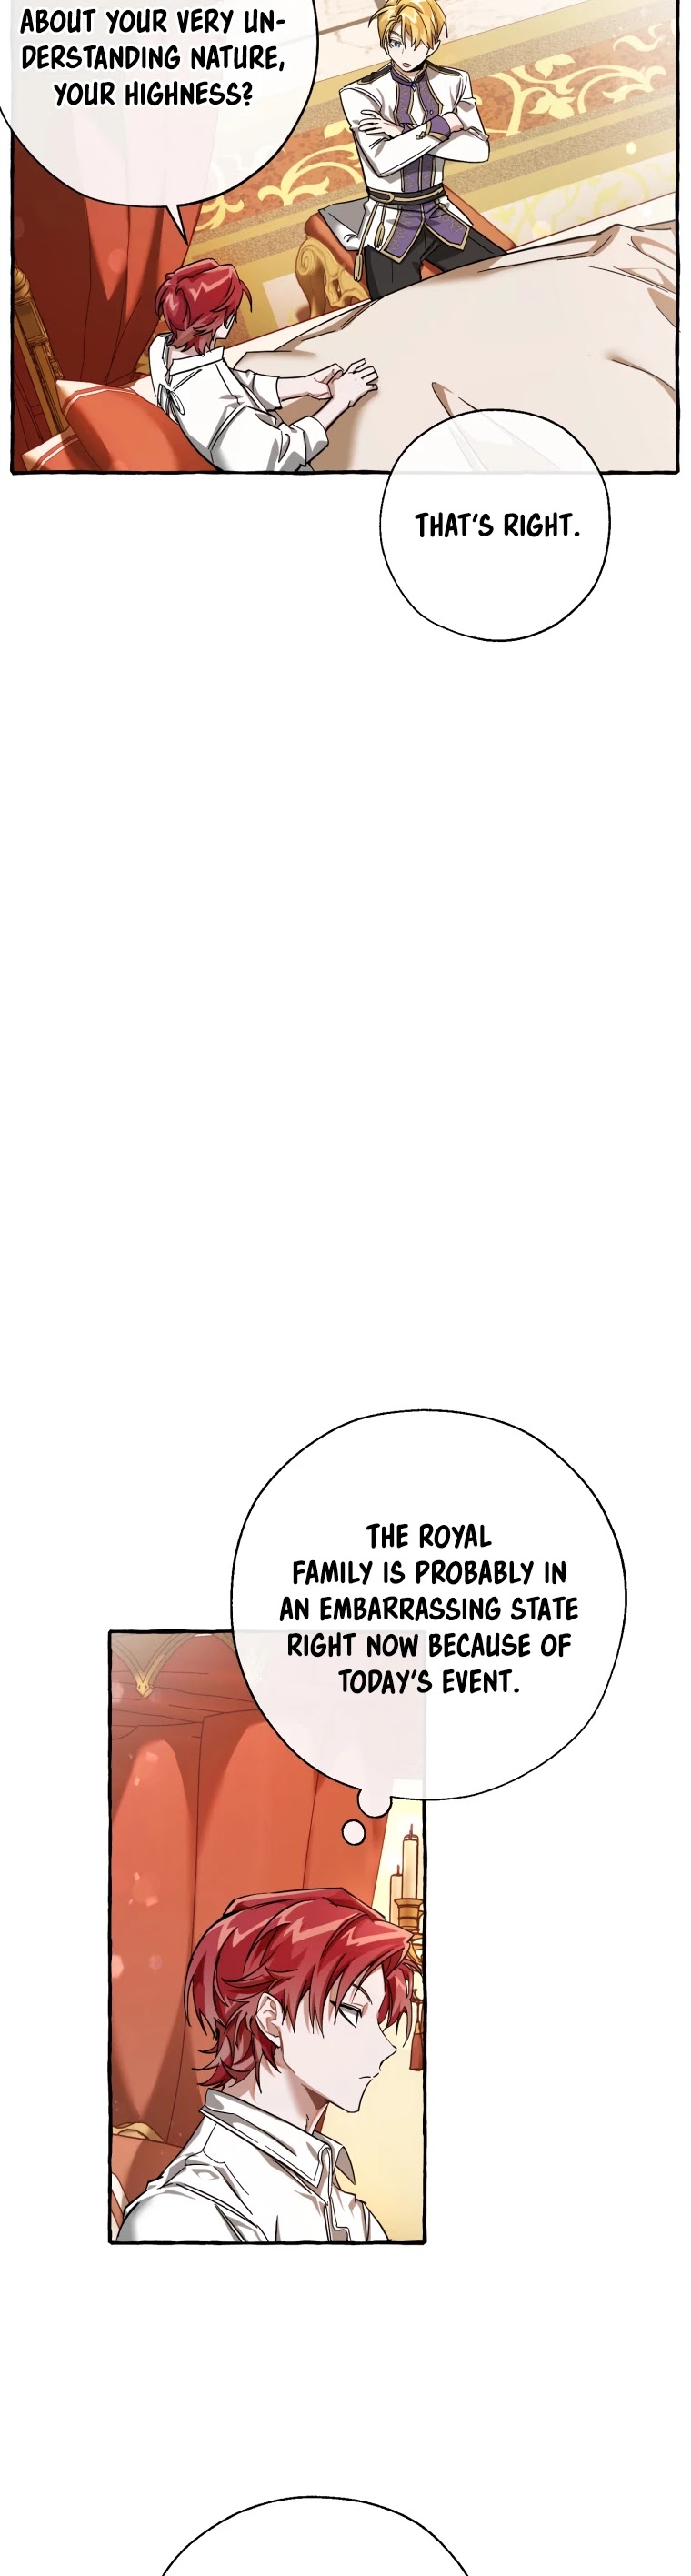 Trash of the Count's Family manga, read Trash of the Count's Family, Trash of the Count's Family anime